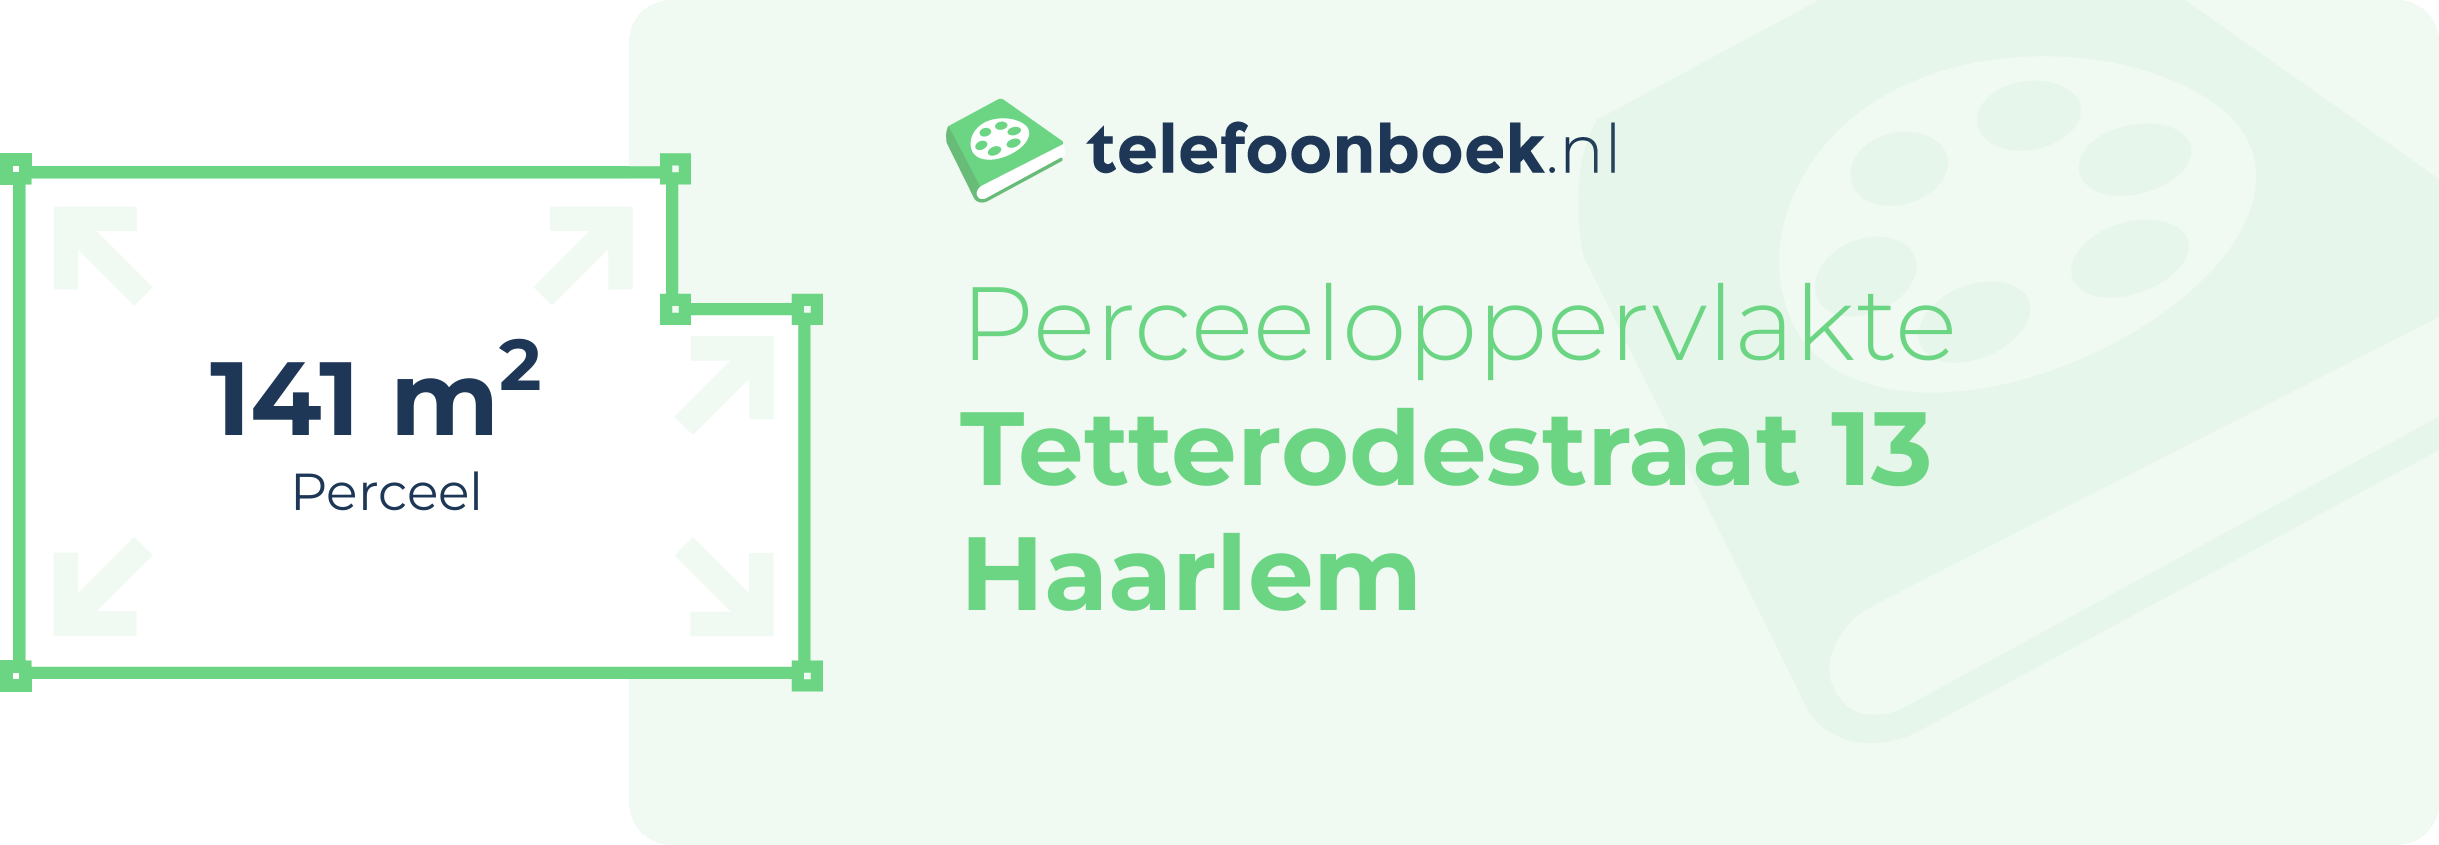 Perceeloppervlakte Tetterodestraat 13 Haarlem